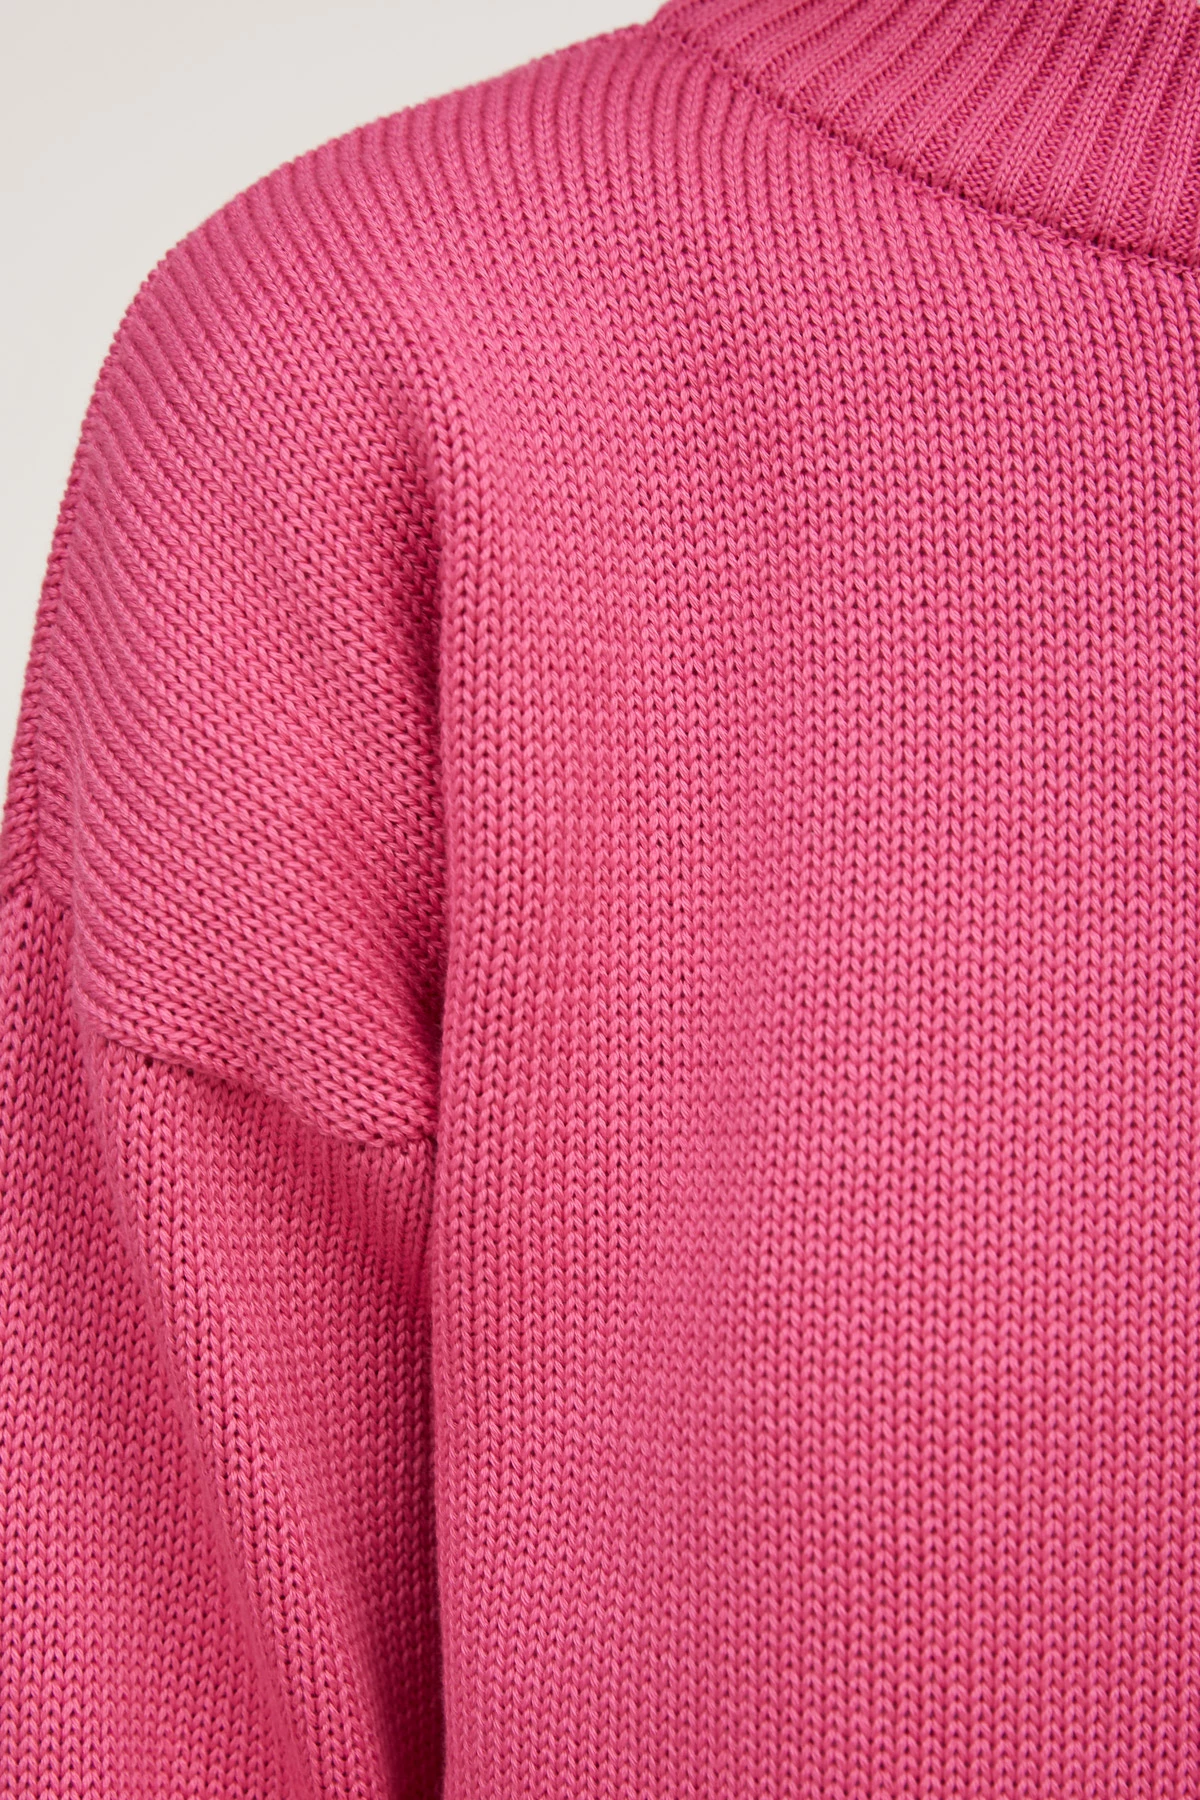 Fuchsia cotton knitted sweater, photo 5